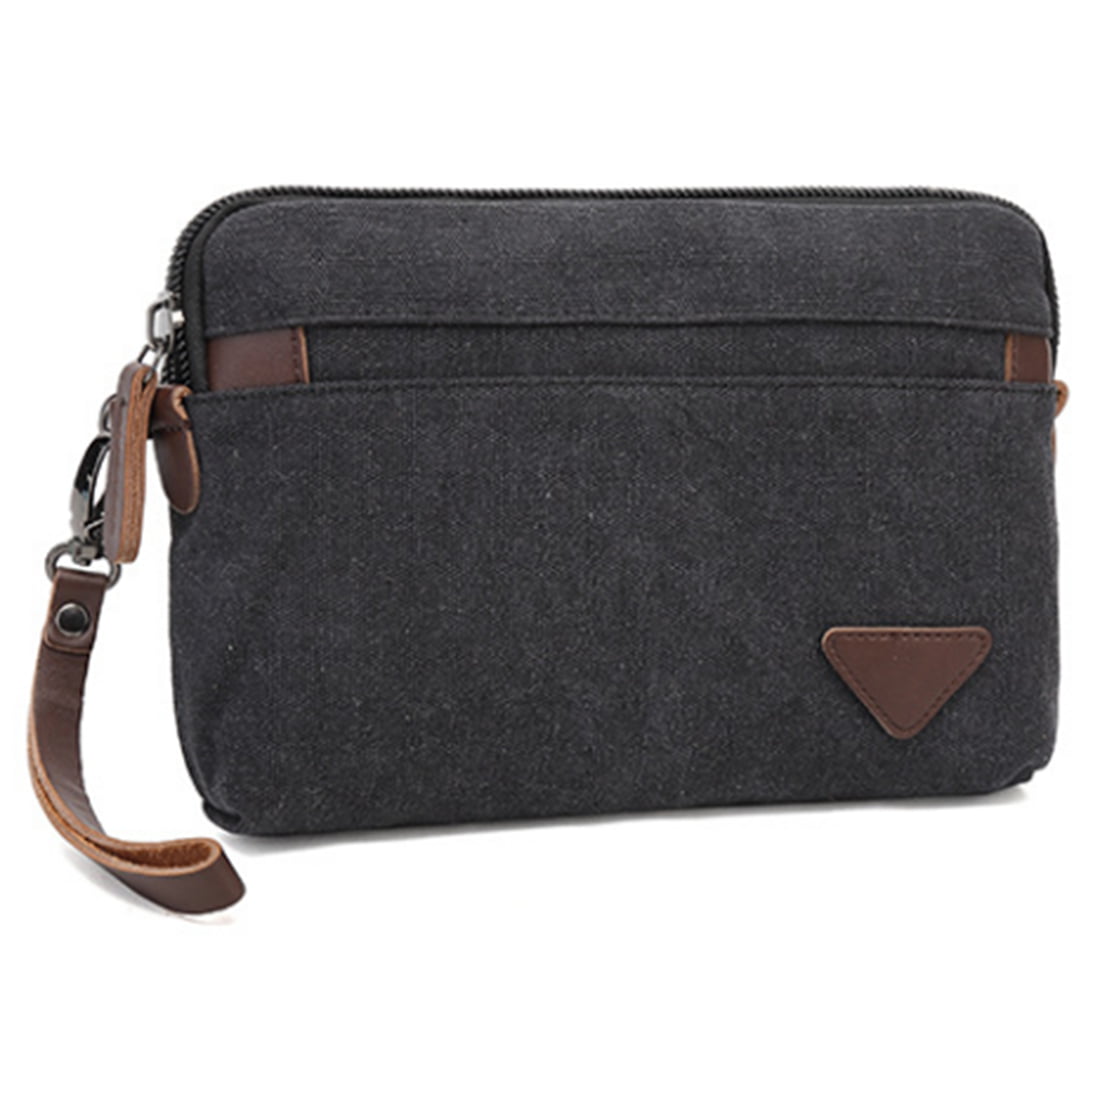 Canvas Wristlet Bag Large Clutch Wallet Purse Zipper Pouch Handbag Organizer with Leather Strap for Women Men